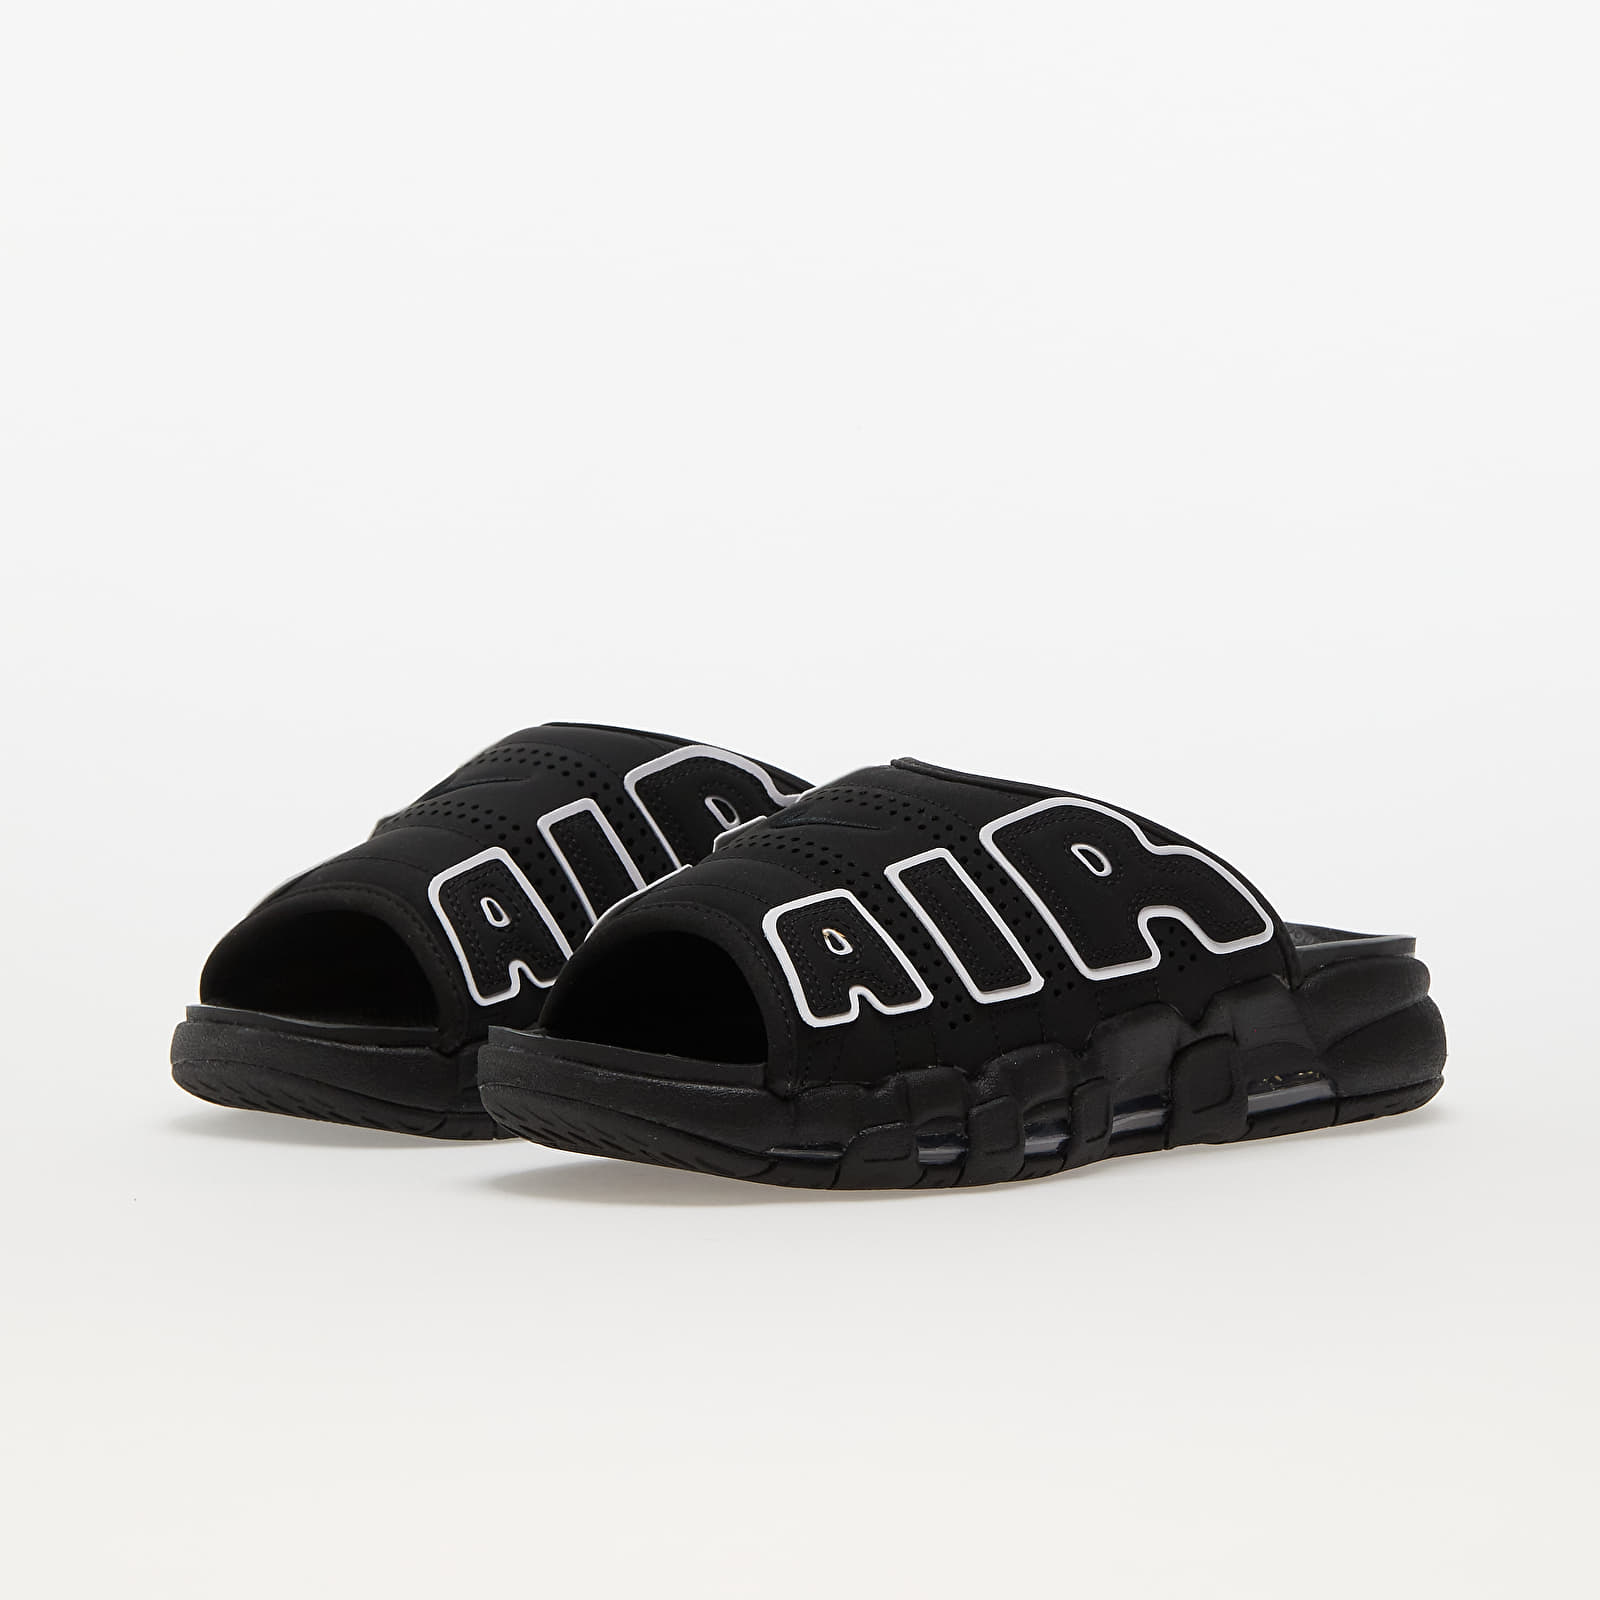 Men's shoes Nike Air More Uptempo Black/ White-Black-Clear | Footshop